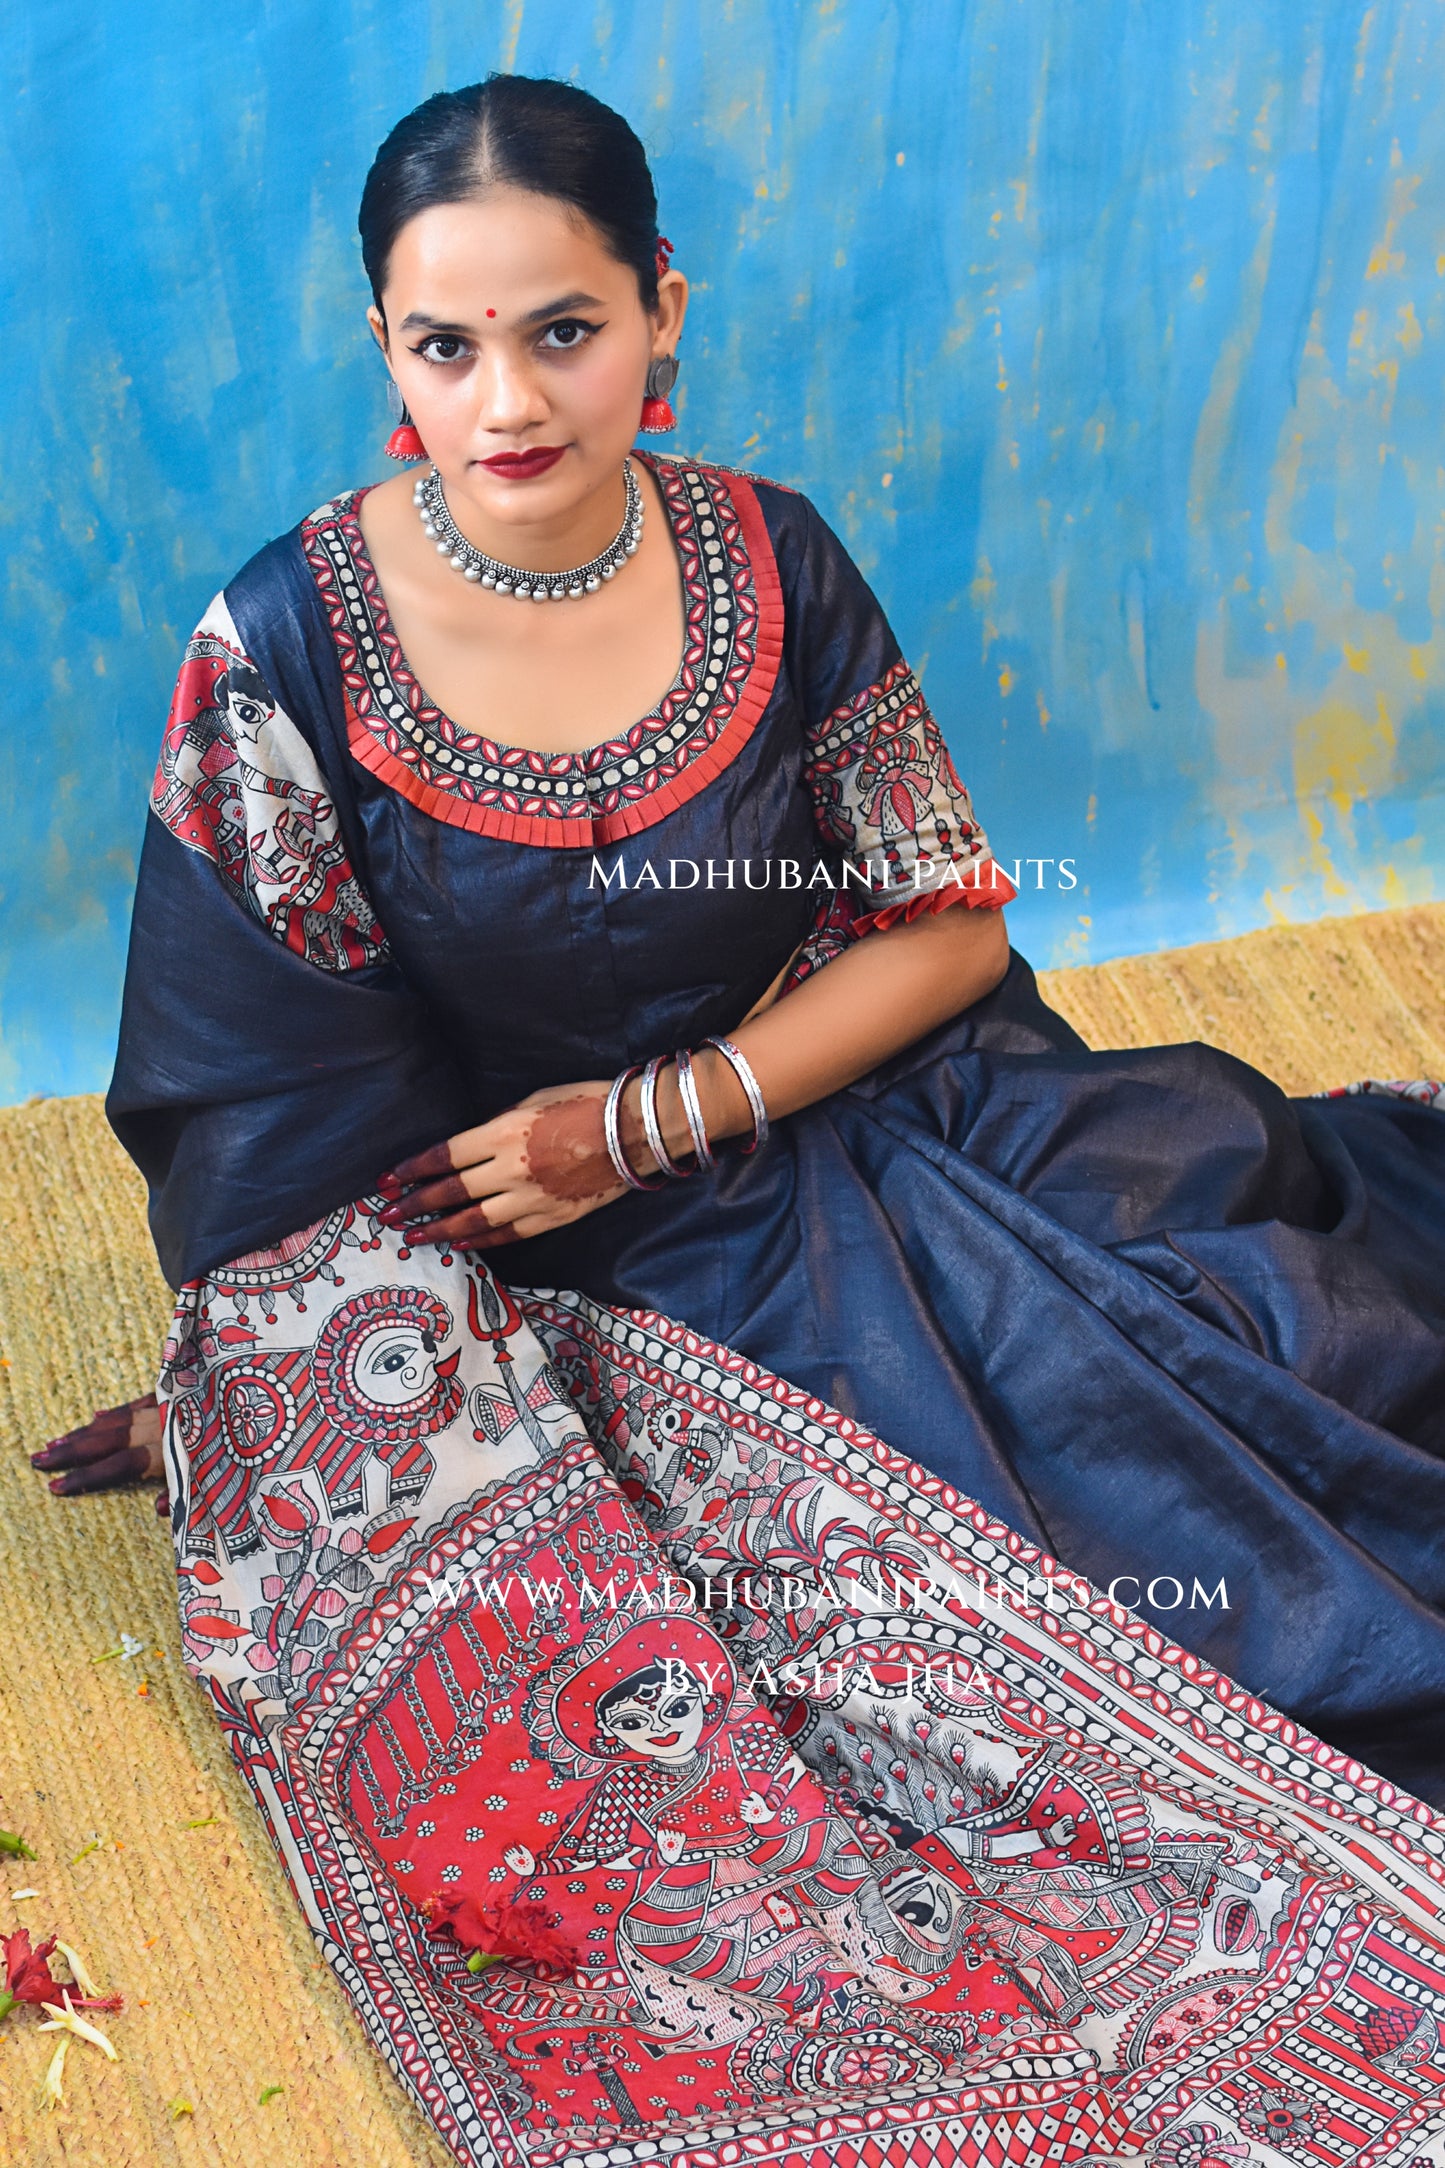 SHAMBHAVI Hand-painted Tussar Silk Saree